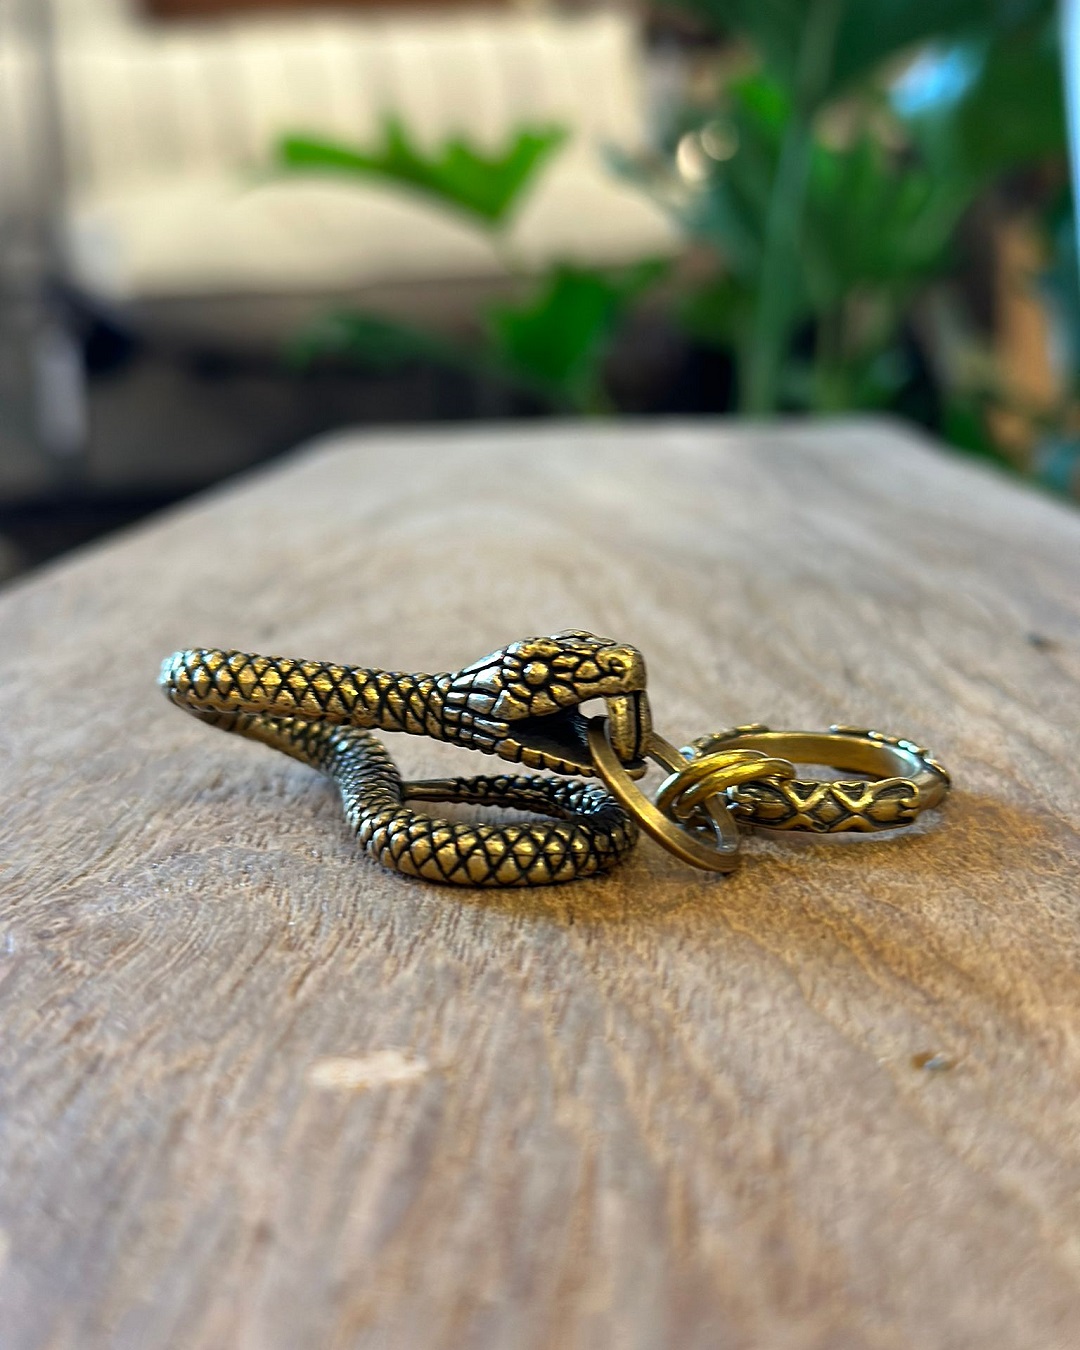 Gold snake keyring on table